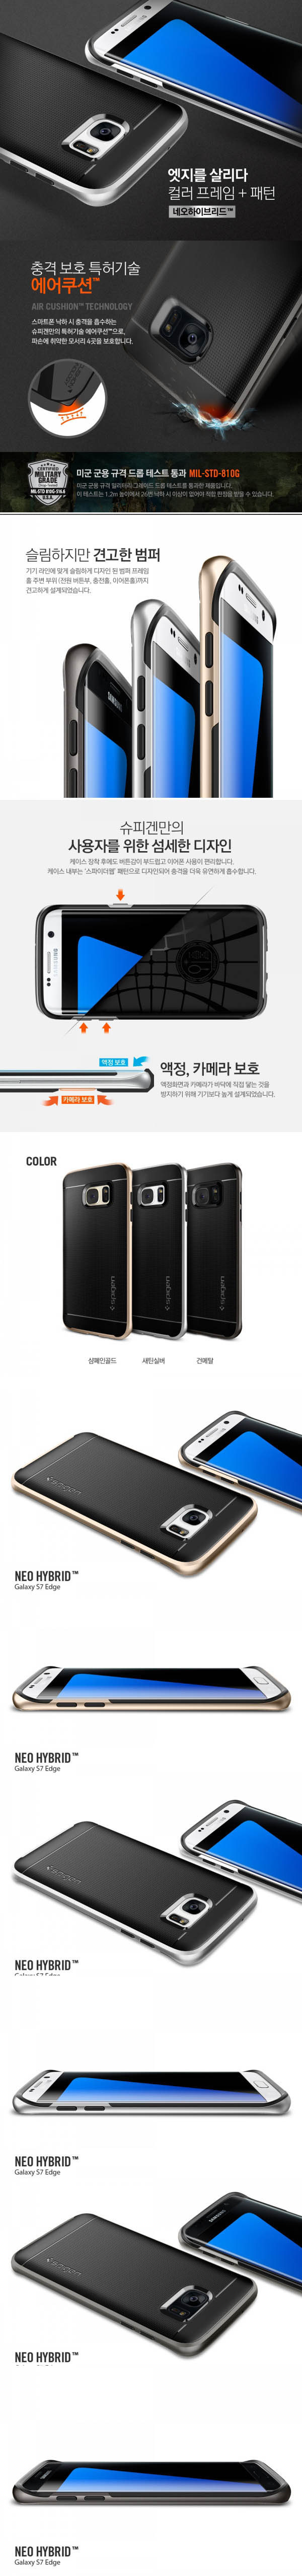 Ốp lưng Galaxy S7 Edge Spigen Neo Hybrid 3